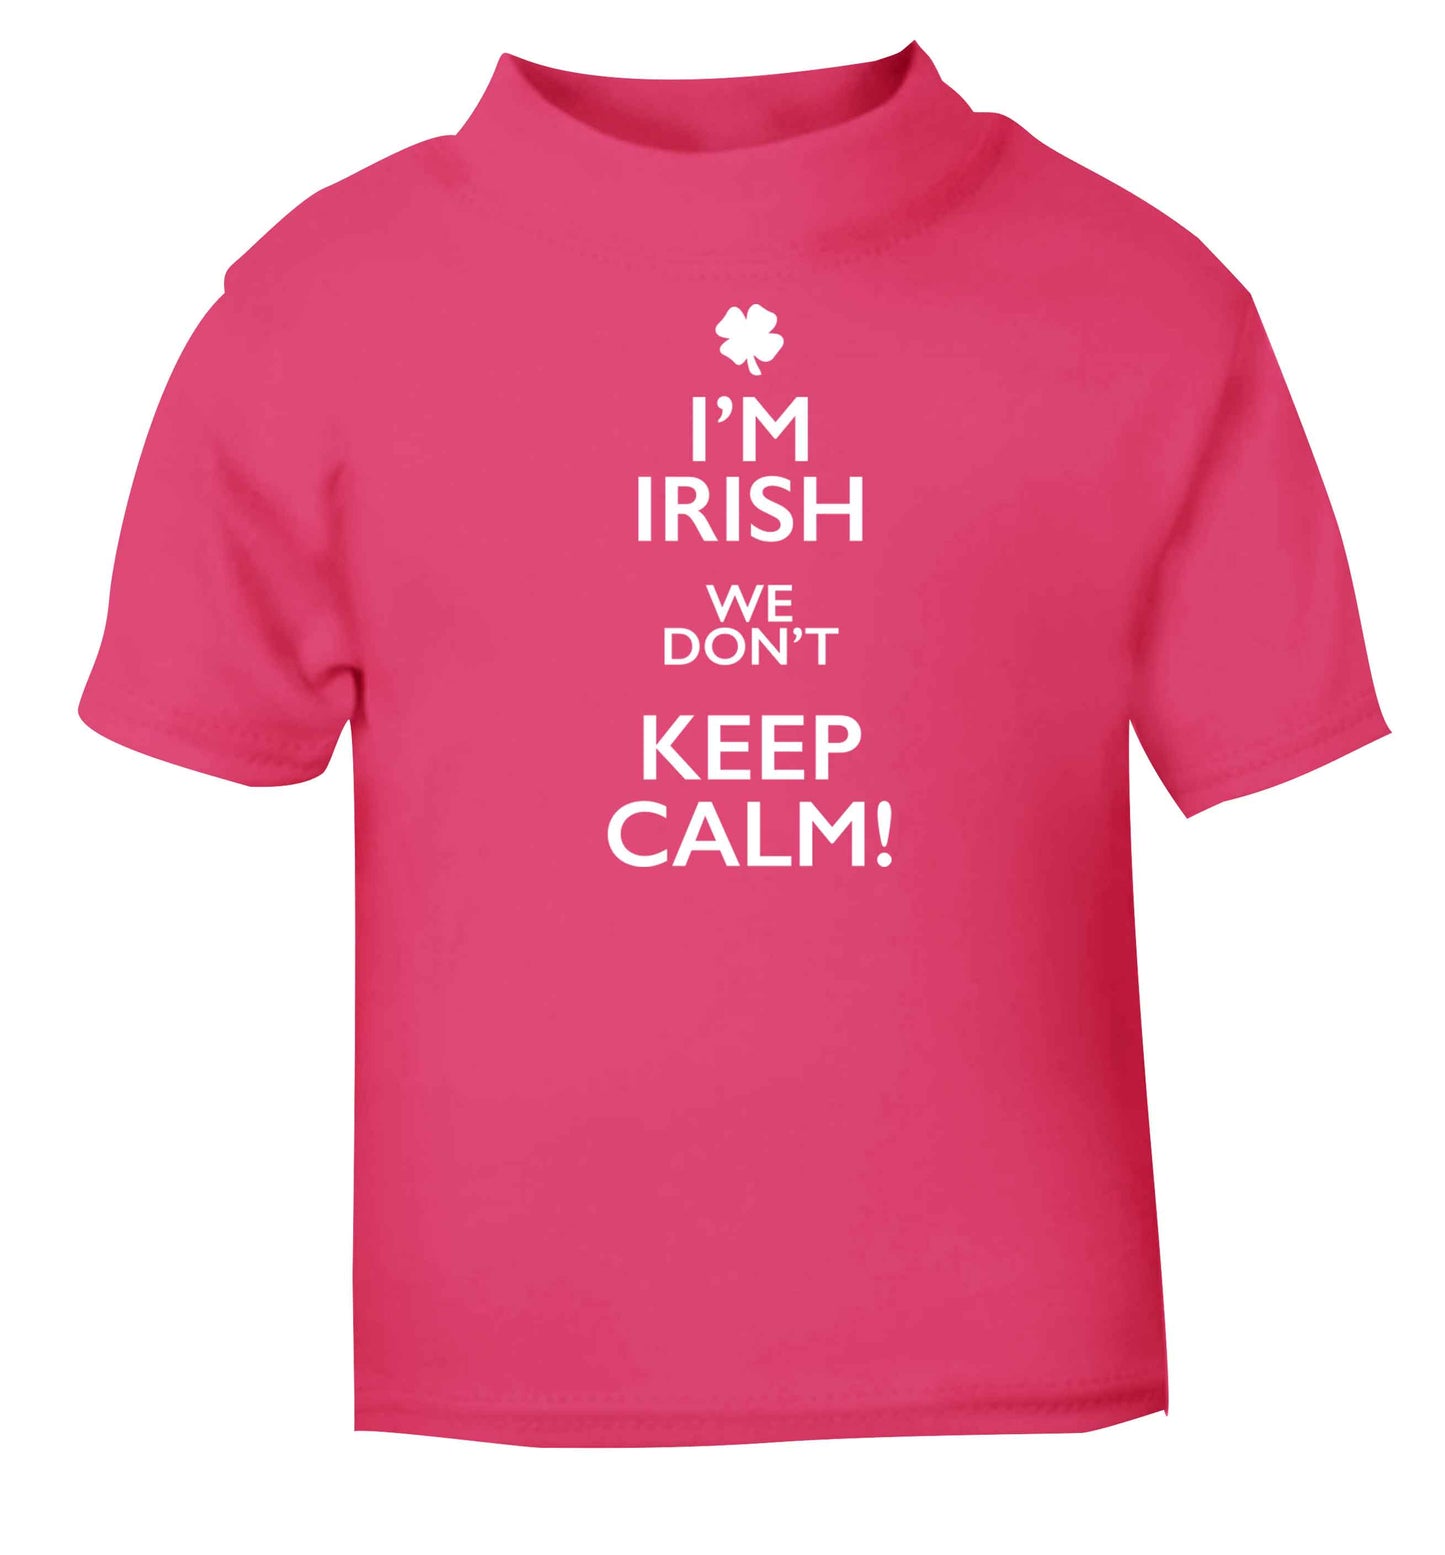 I'm Irish we don't keep calm pink baby toddler Tshirt 2 Years